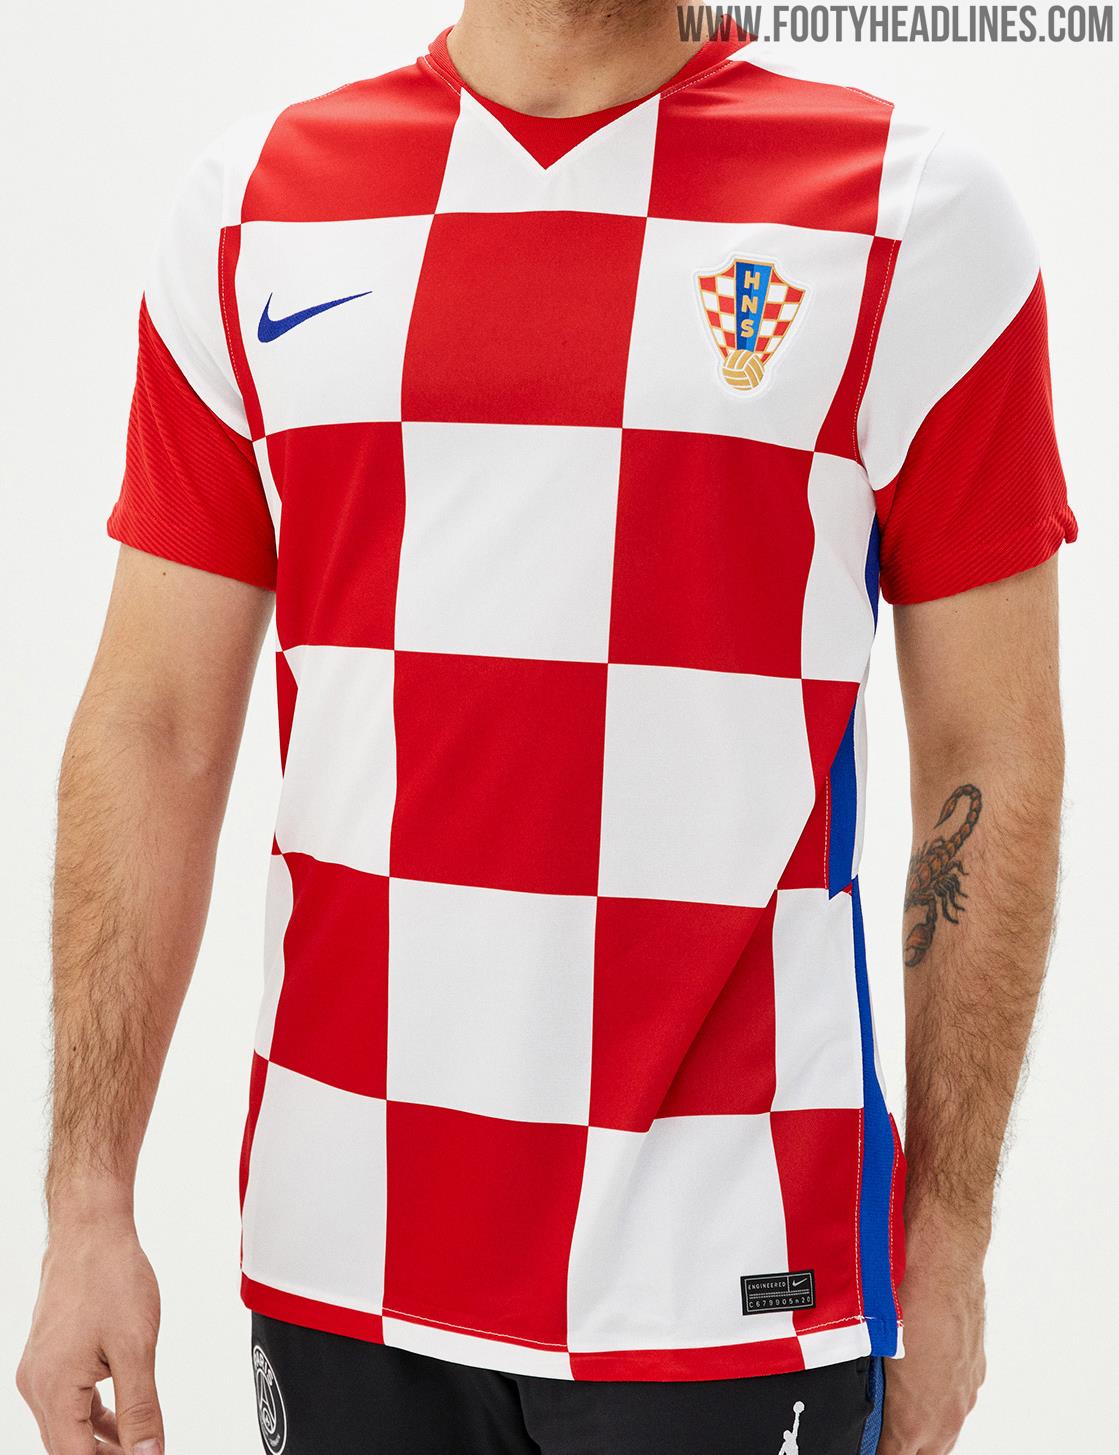 What If? Croatia EURO 2020 Kits With Nike's Alternative Design - Footy ...